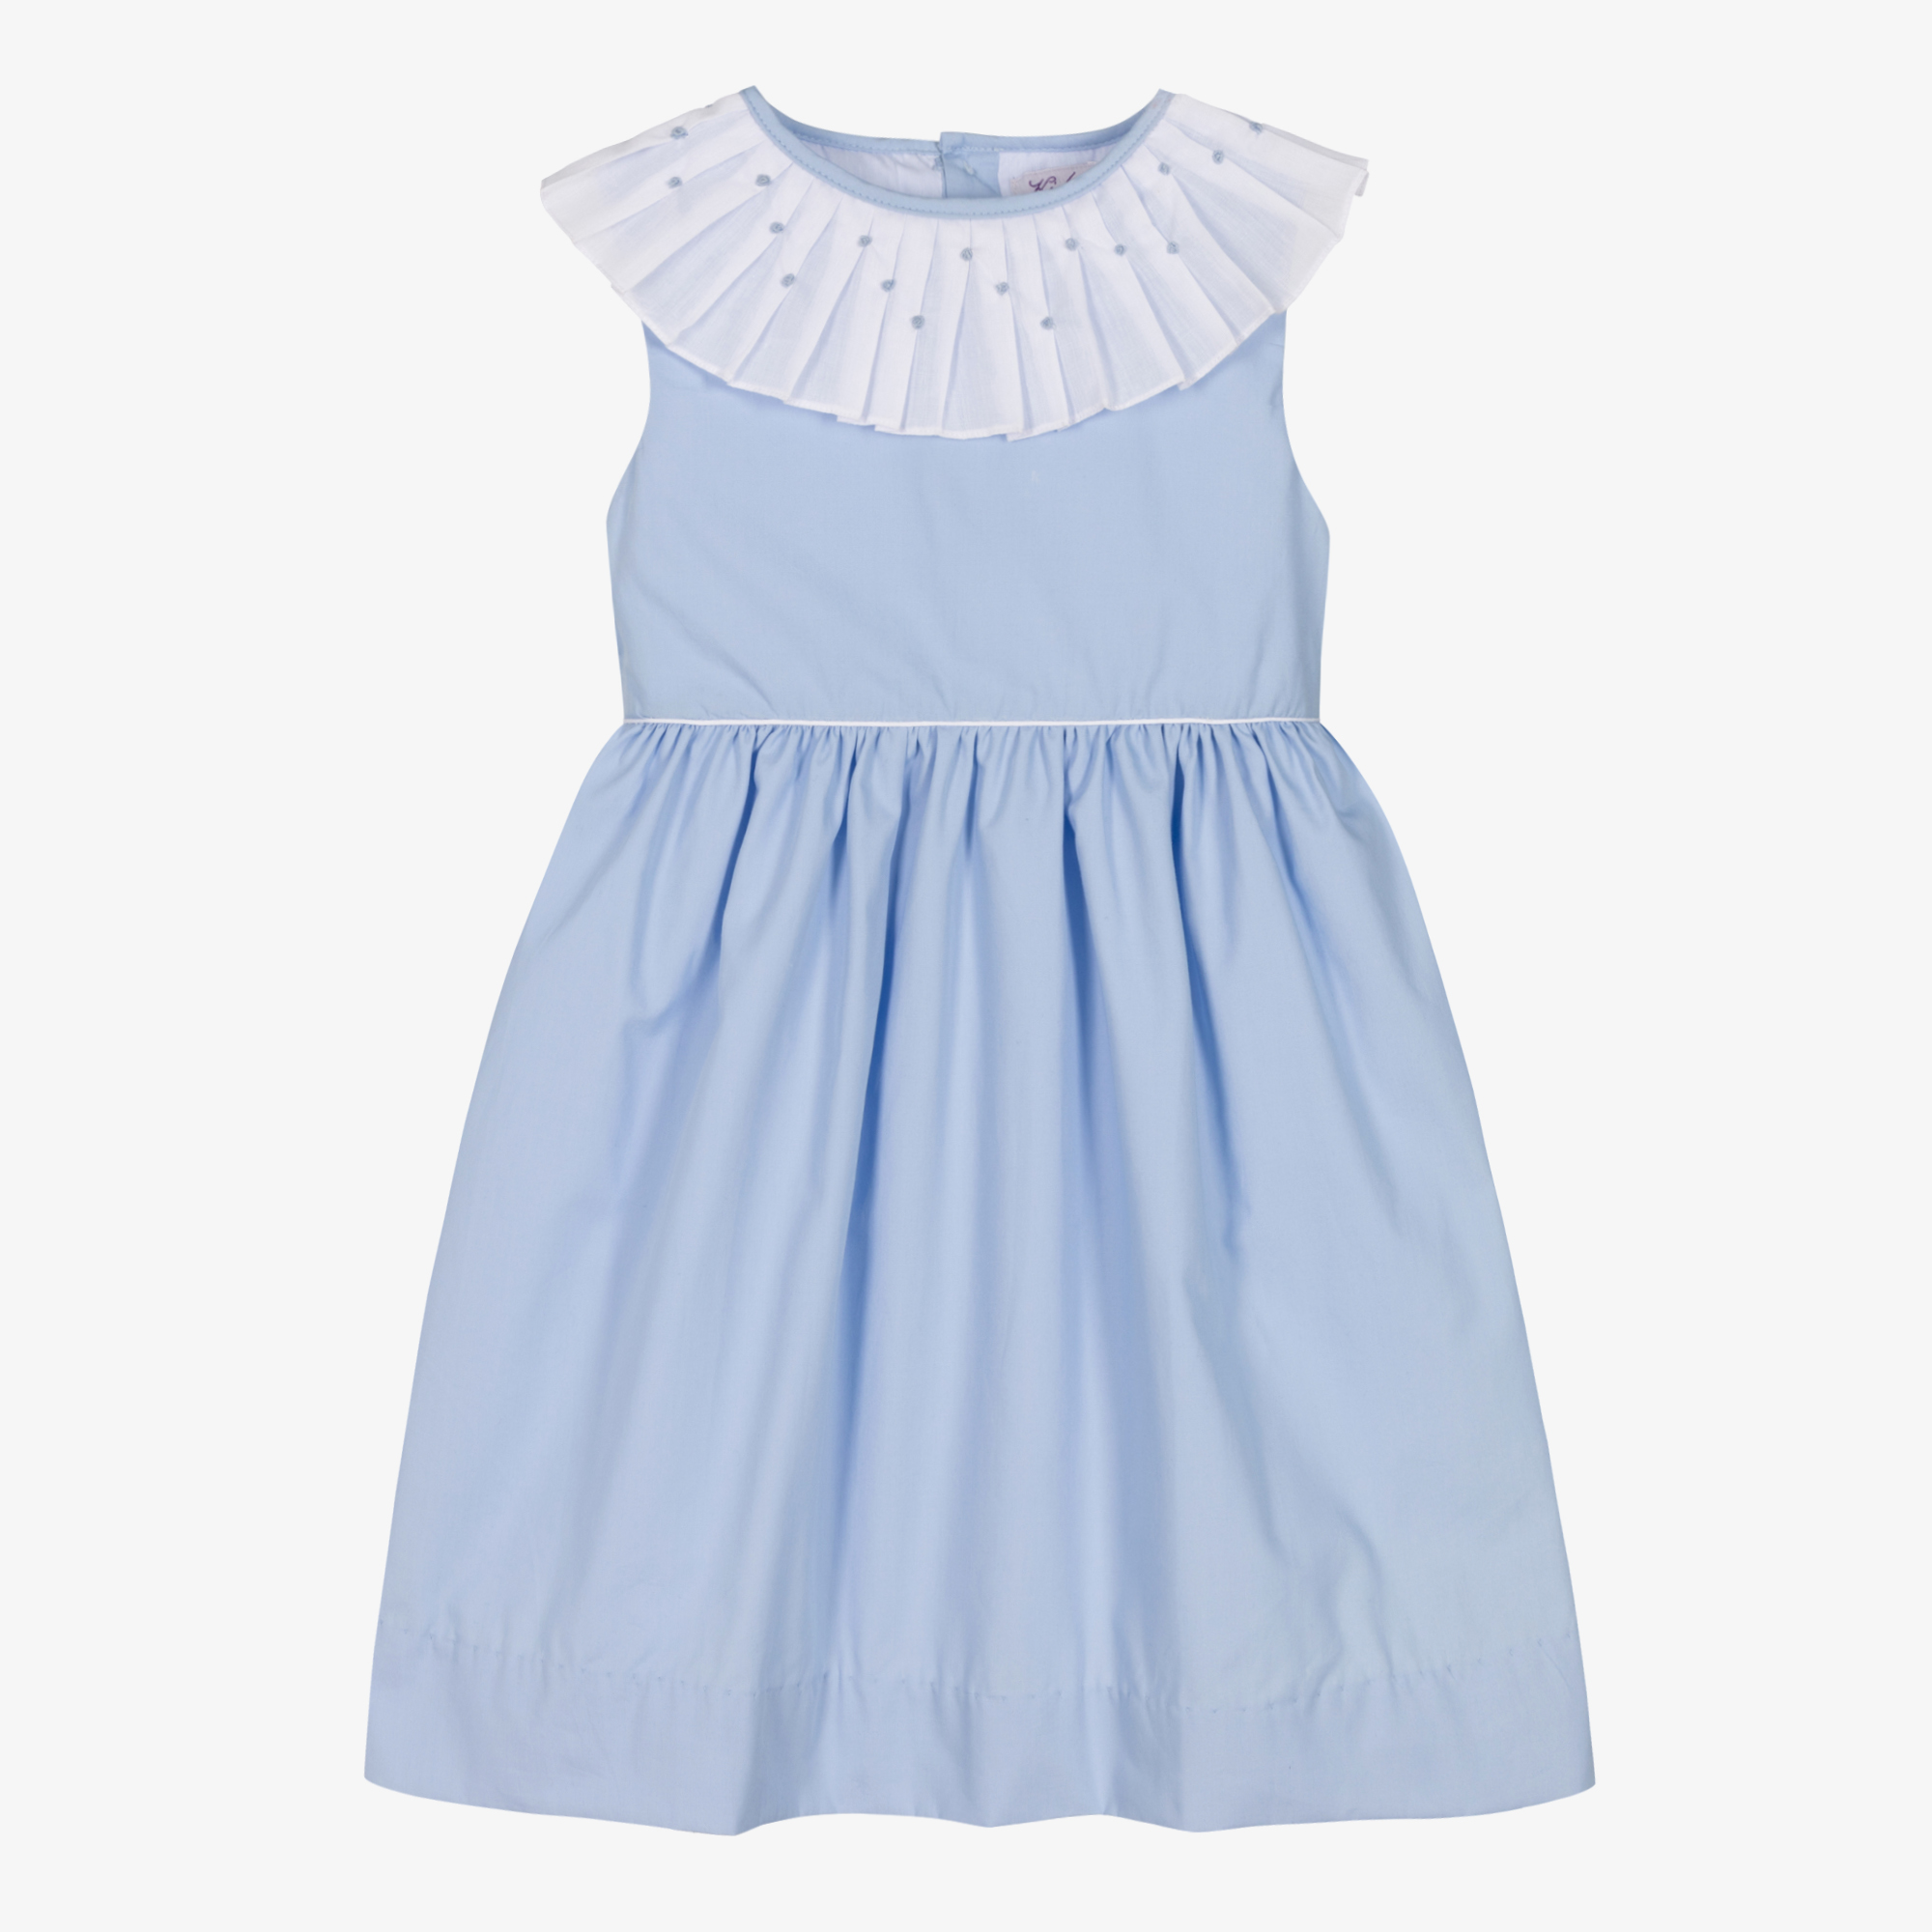 Sky blue cotton plated dress.